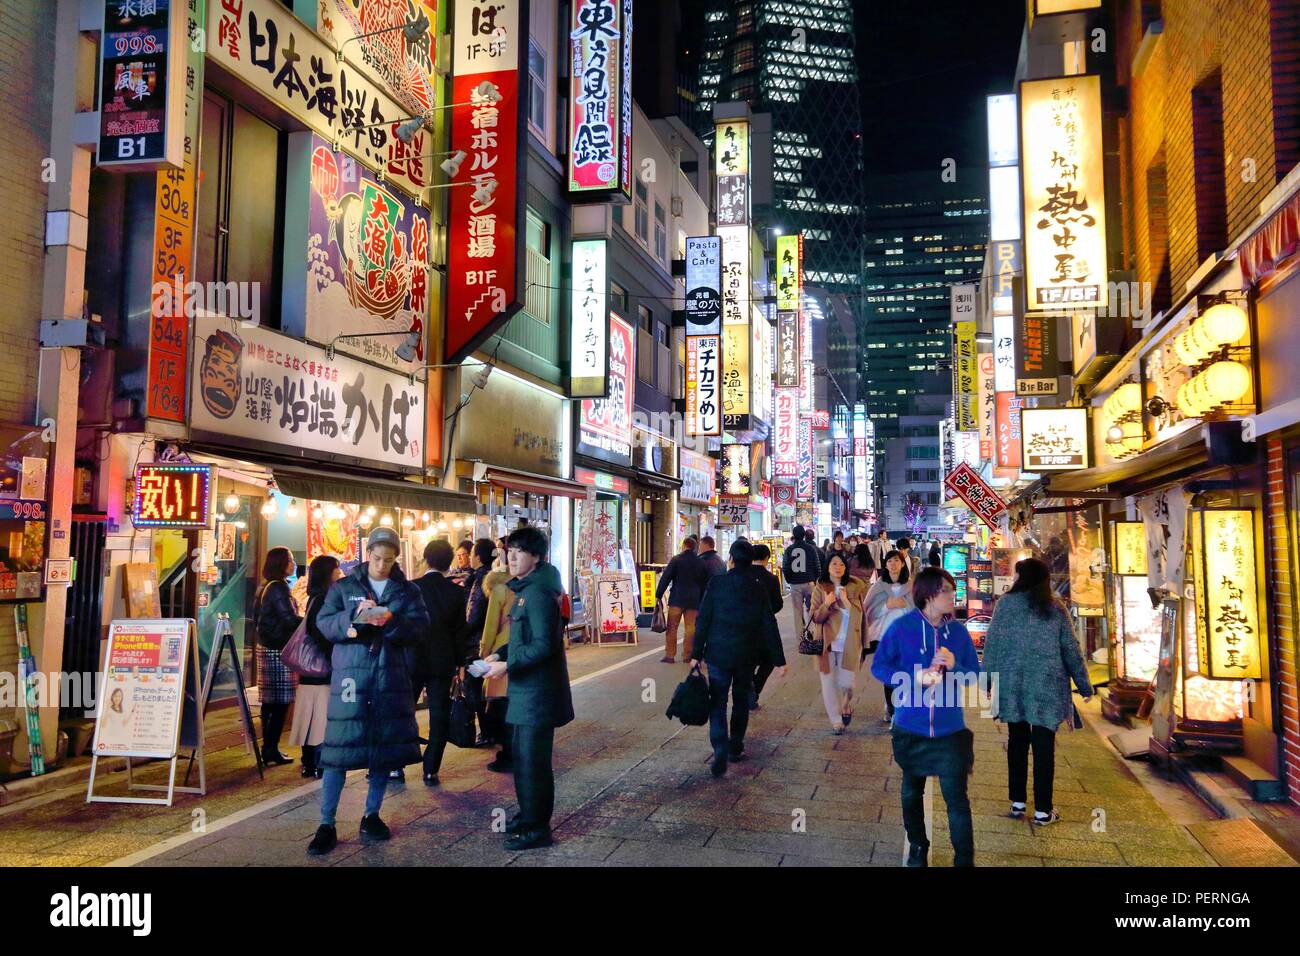 TOKYO, JAPAN - DECEMBER 2, 2016: People visit restaurants of Shinjuku district of Tokyo, Japan. Tokyo is the capital city of Japan. 37.8 million peopl Stock Photo